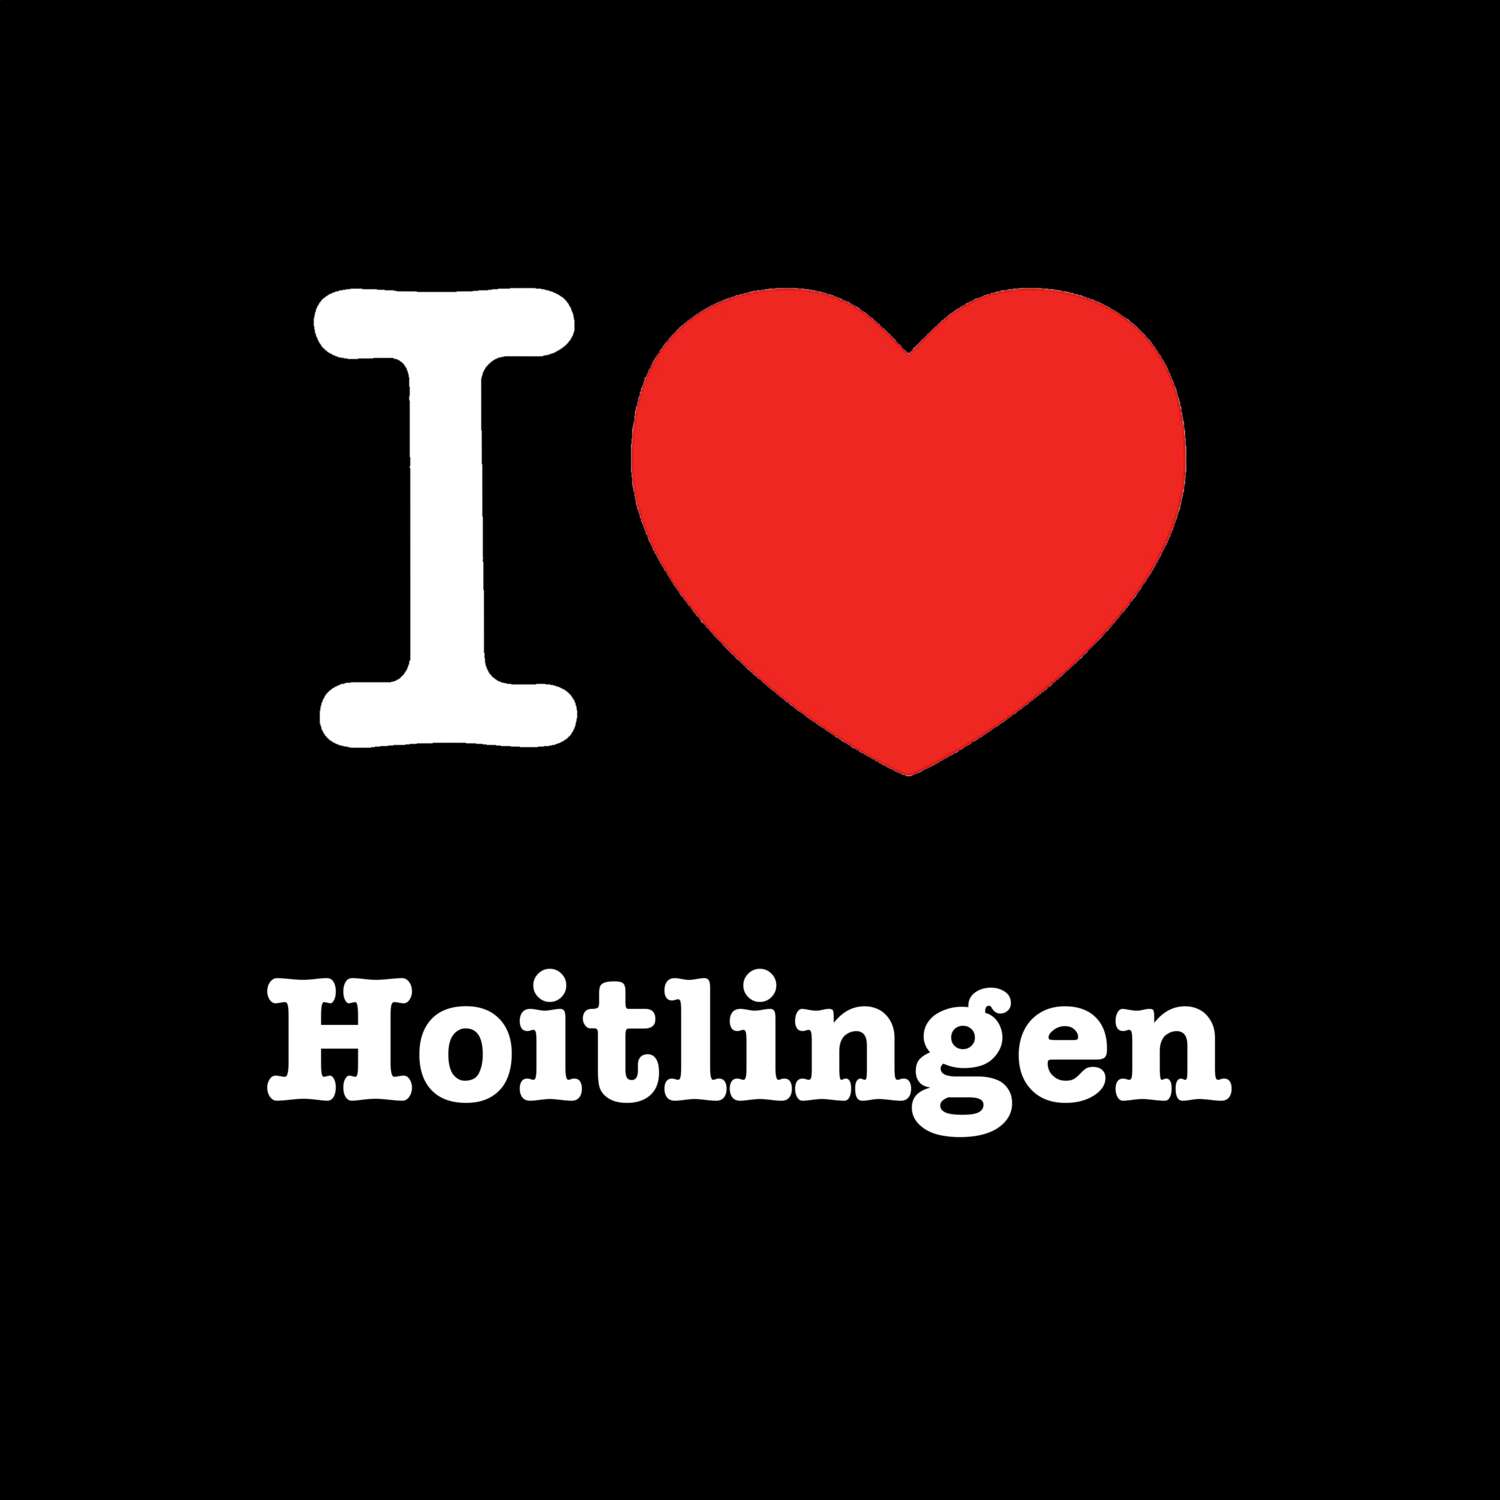 Hoitlingen T-Shirt »I love«